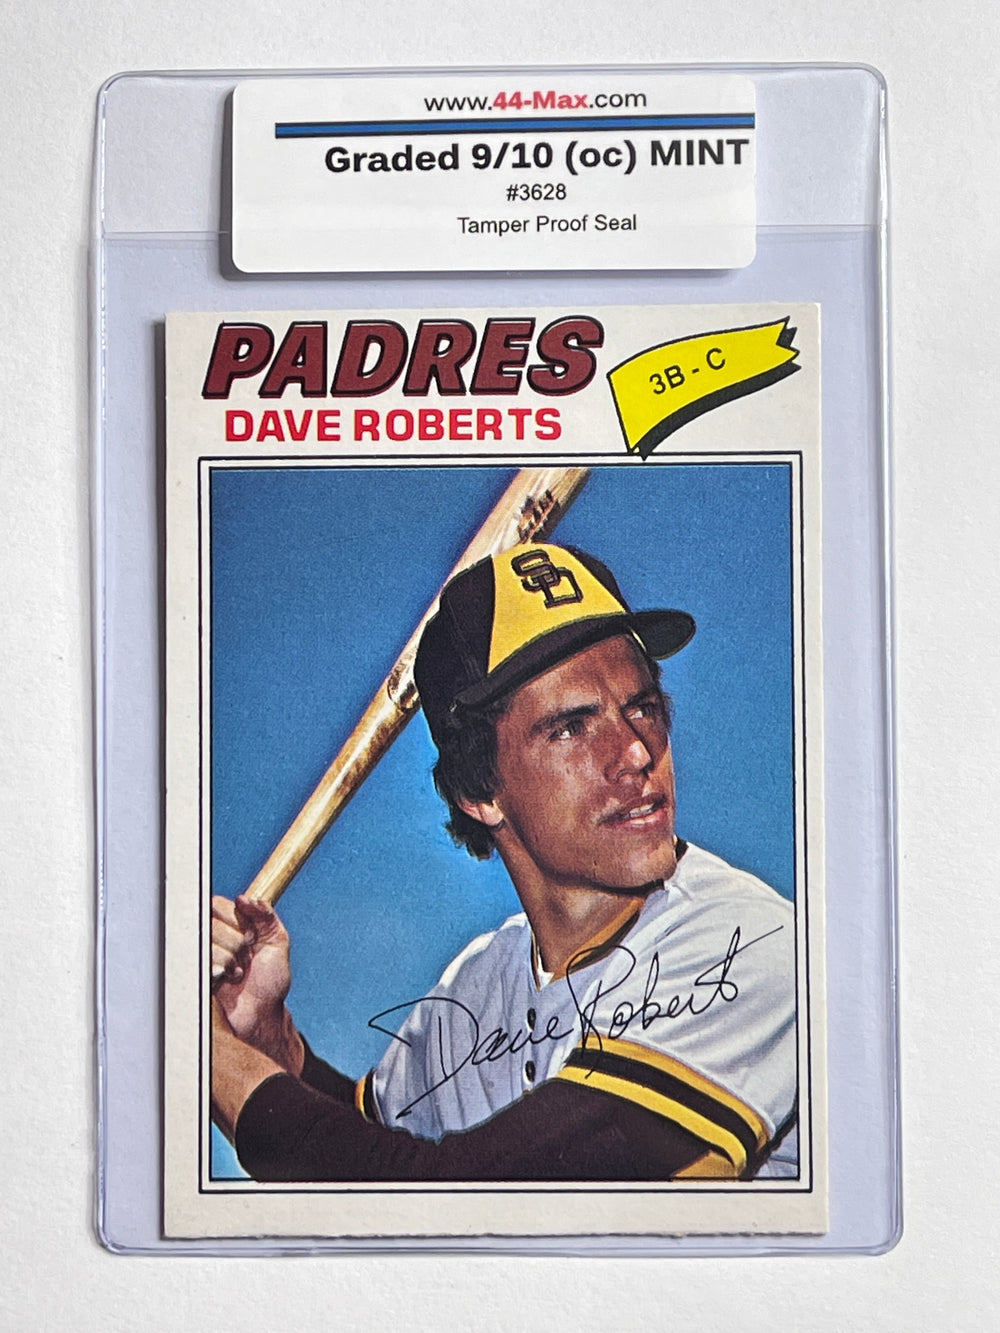 Dave Roberts 1977 O-Pee-Chee #193 Baseball Card. 44-Max 9/10 (oc) MINT #3628